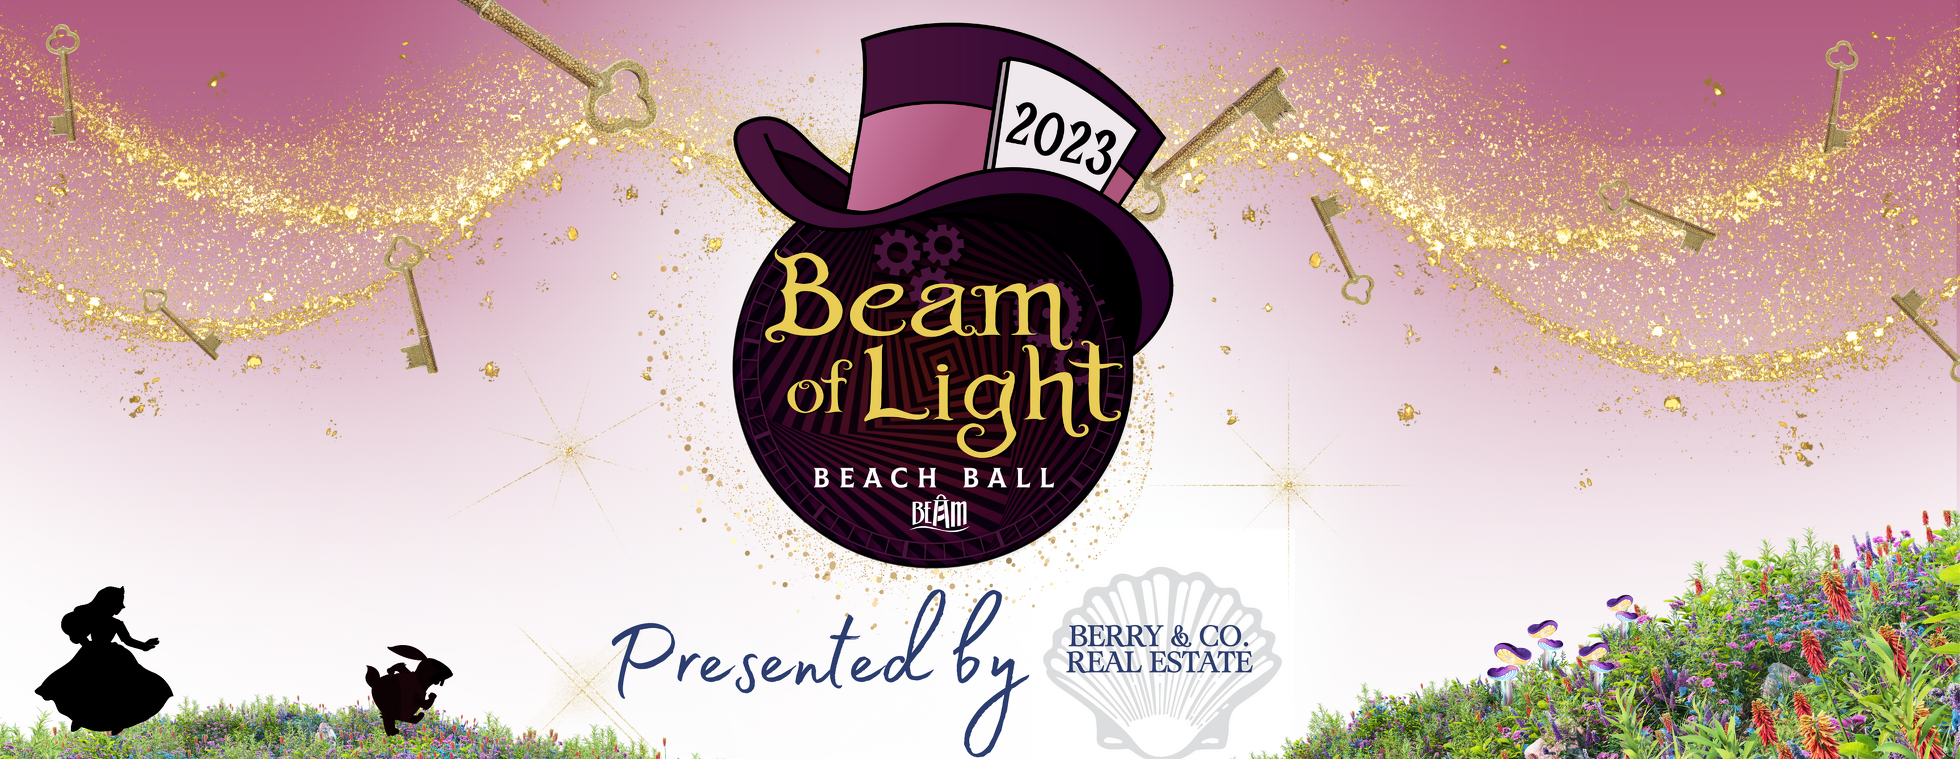 2023 BEAM of Light Beach Ball Event Page